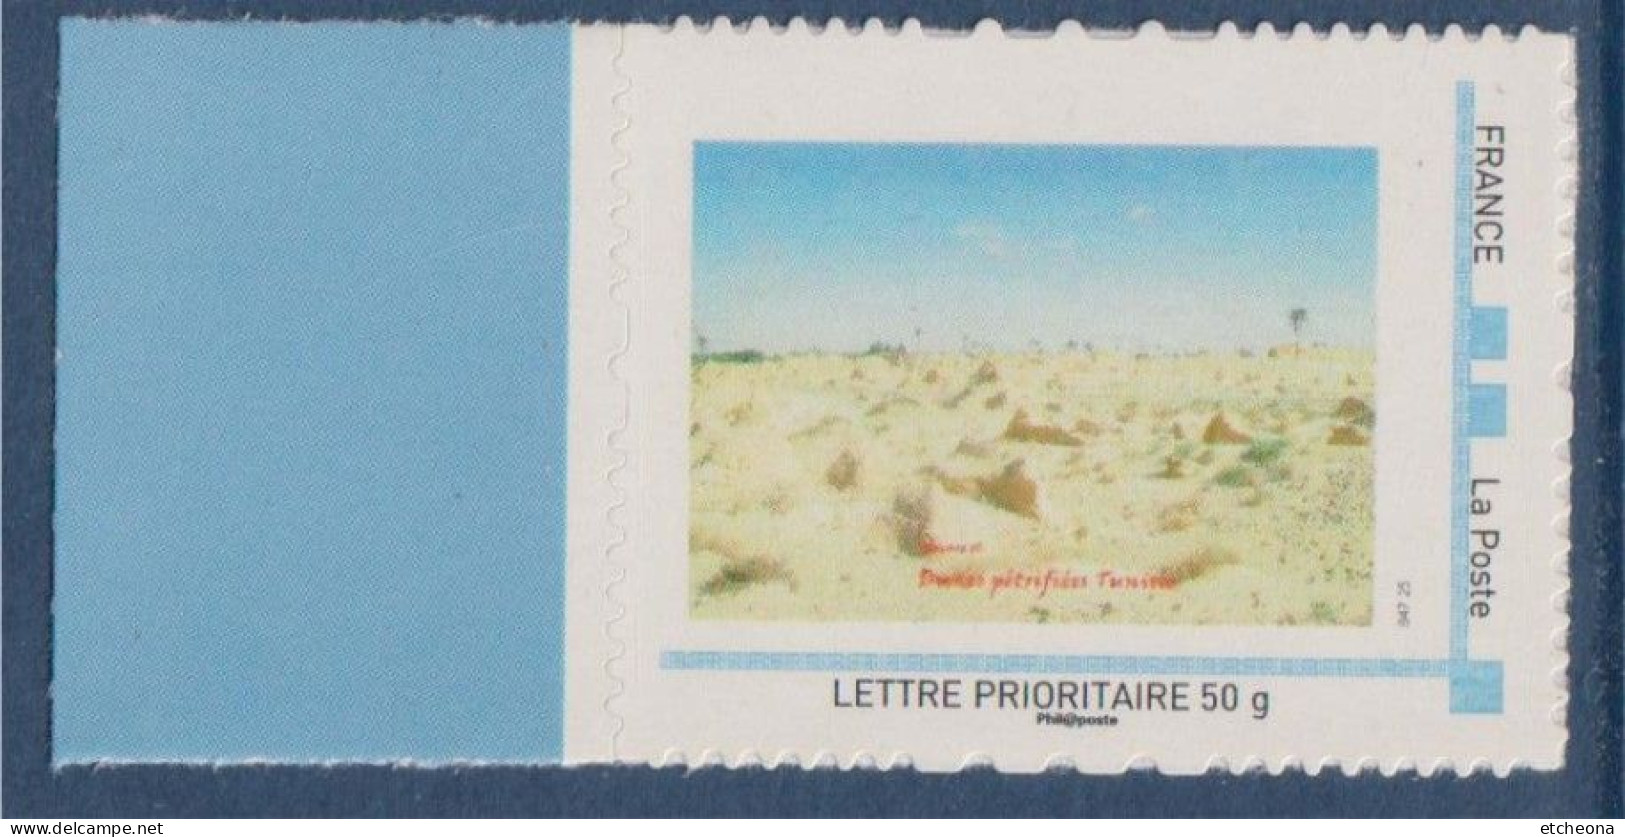 MonTimbraMoi, France -50g Horizontal, Série Nature, Dunes Pétrifiées  Tunisie, Type Etoile - Unused Stamps